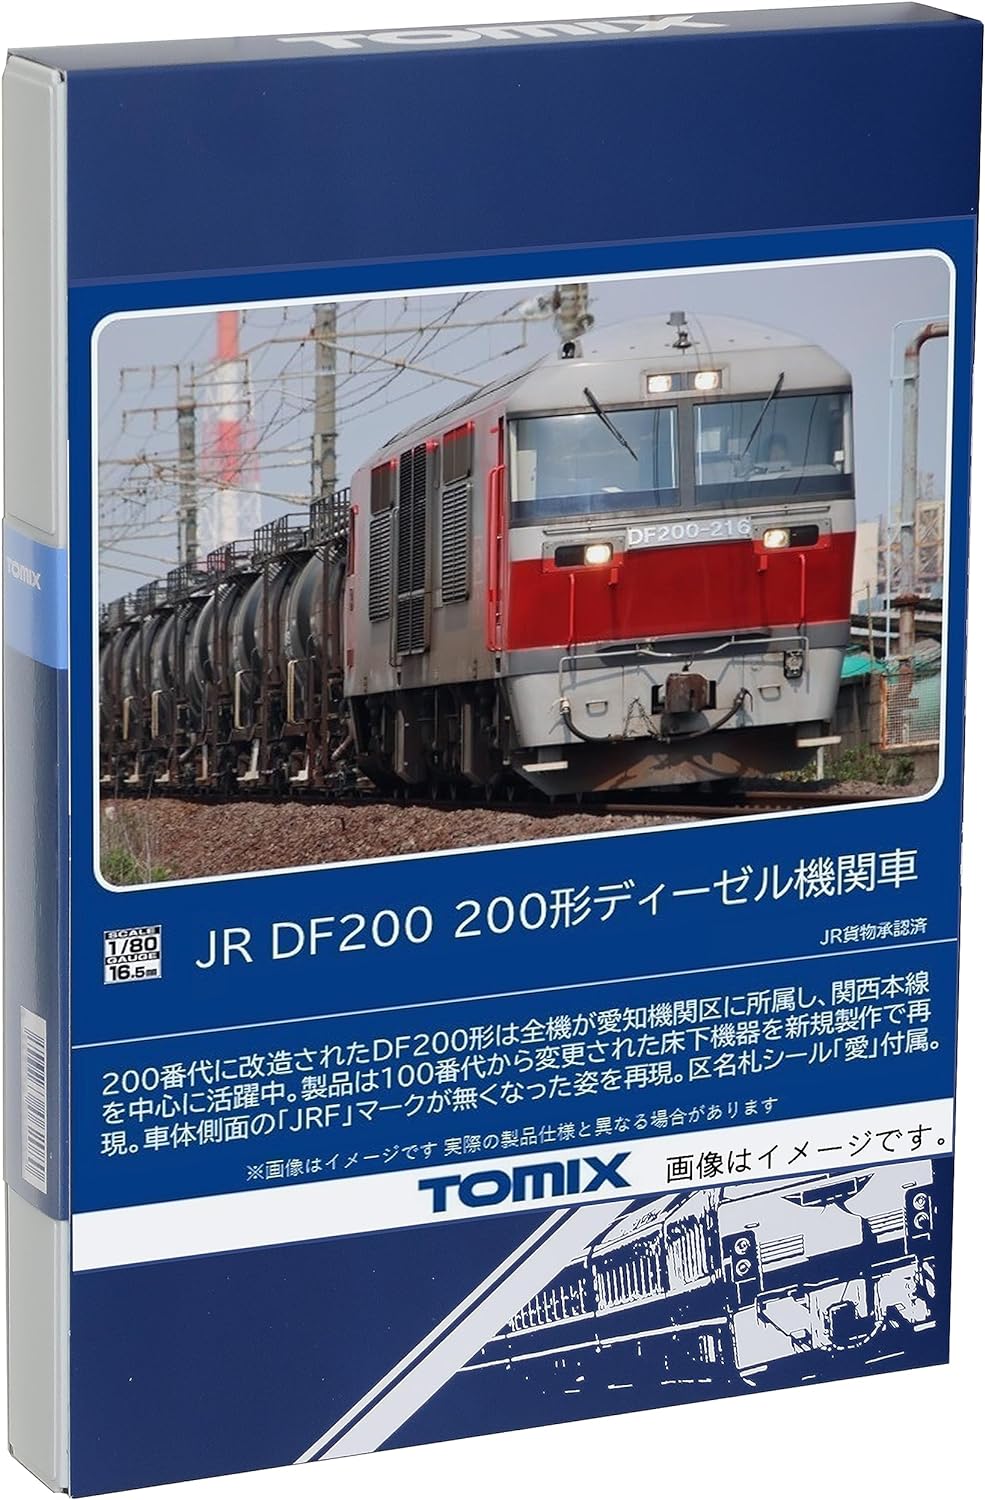 TOMIX HO-241 HO Gauge JR DF200 Type 200 Prestige Model Railway Model Diesel Locomotive - BanzaiHobby